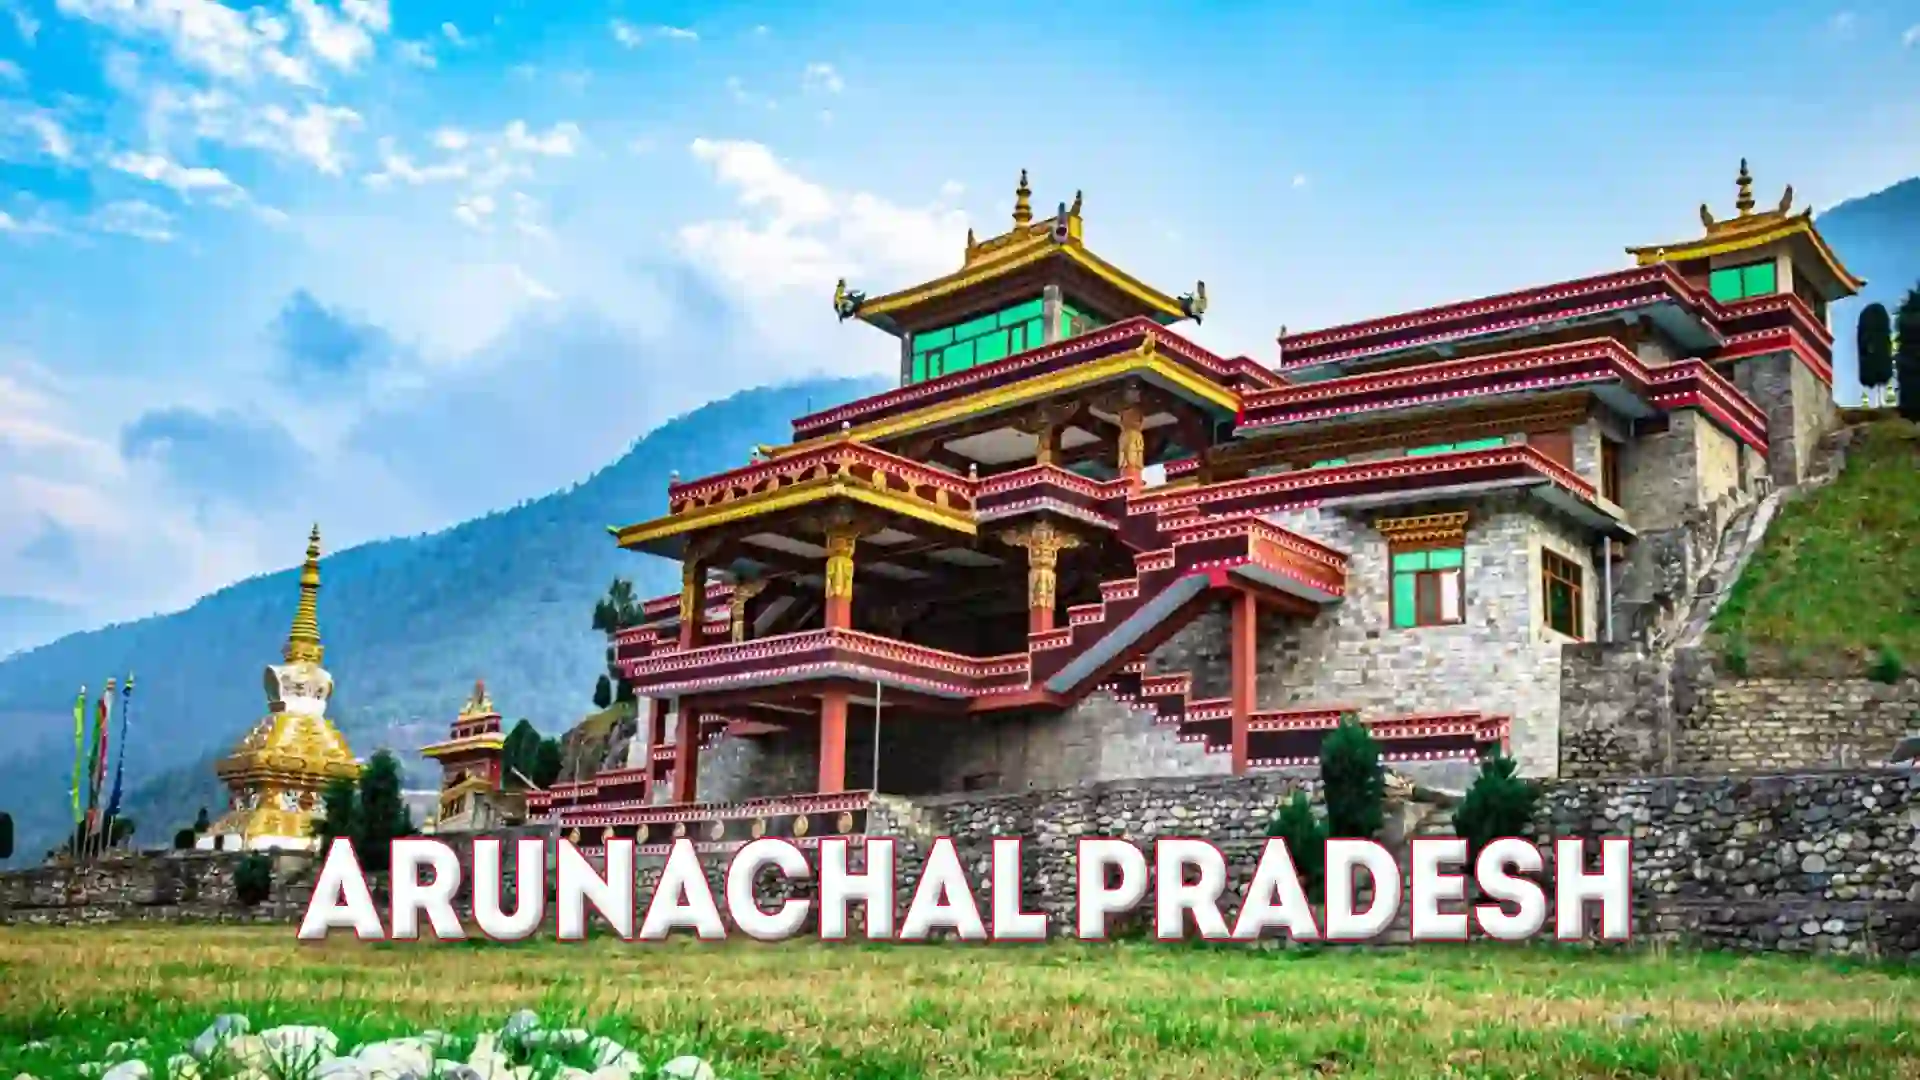 statehood day of Arunachal pradesh and mizoram This Post Design By The Revolution Deshbhakt Hindustani